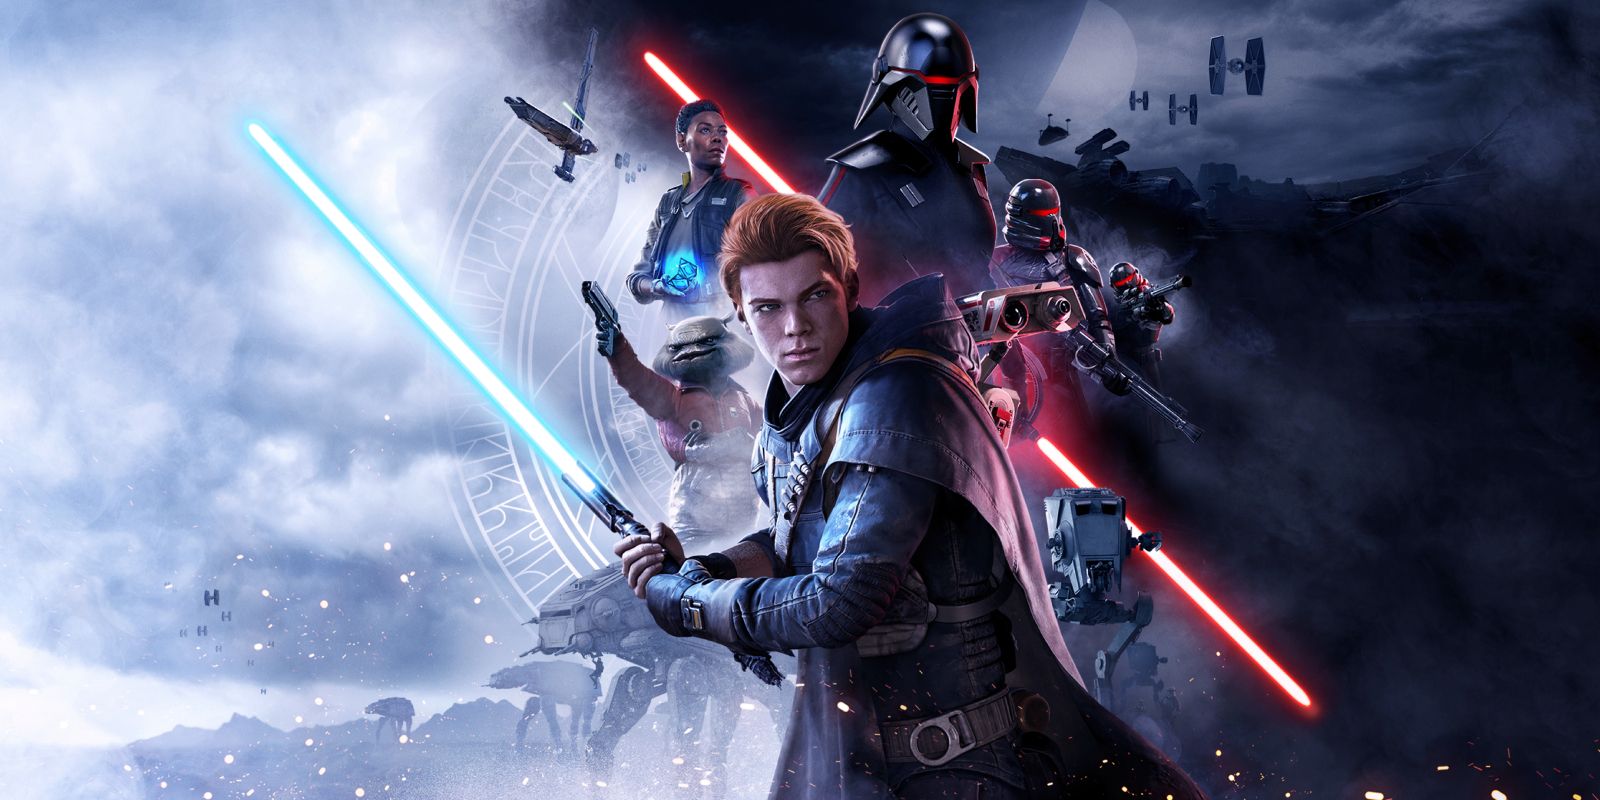 An image of a Jedi wielding a lightsaber in Star Wars